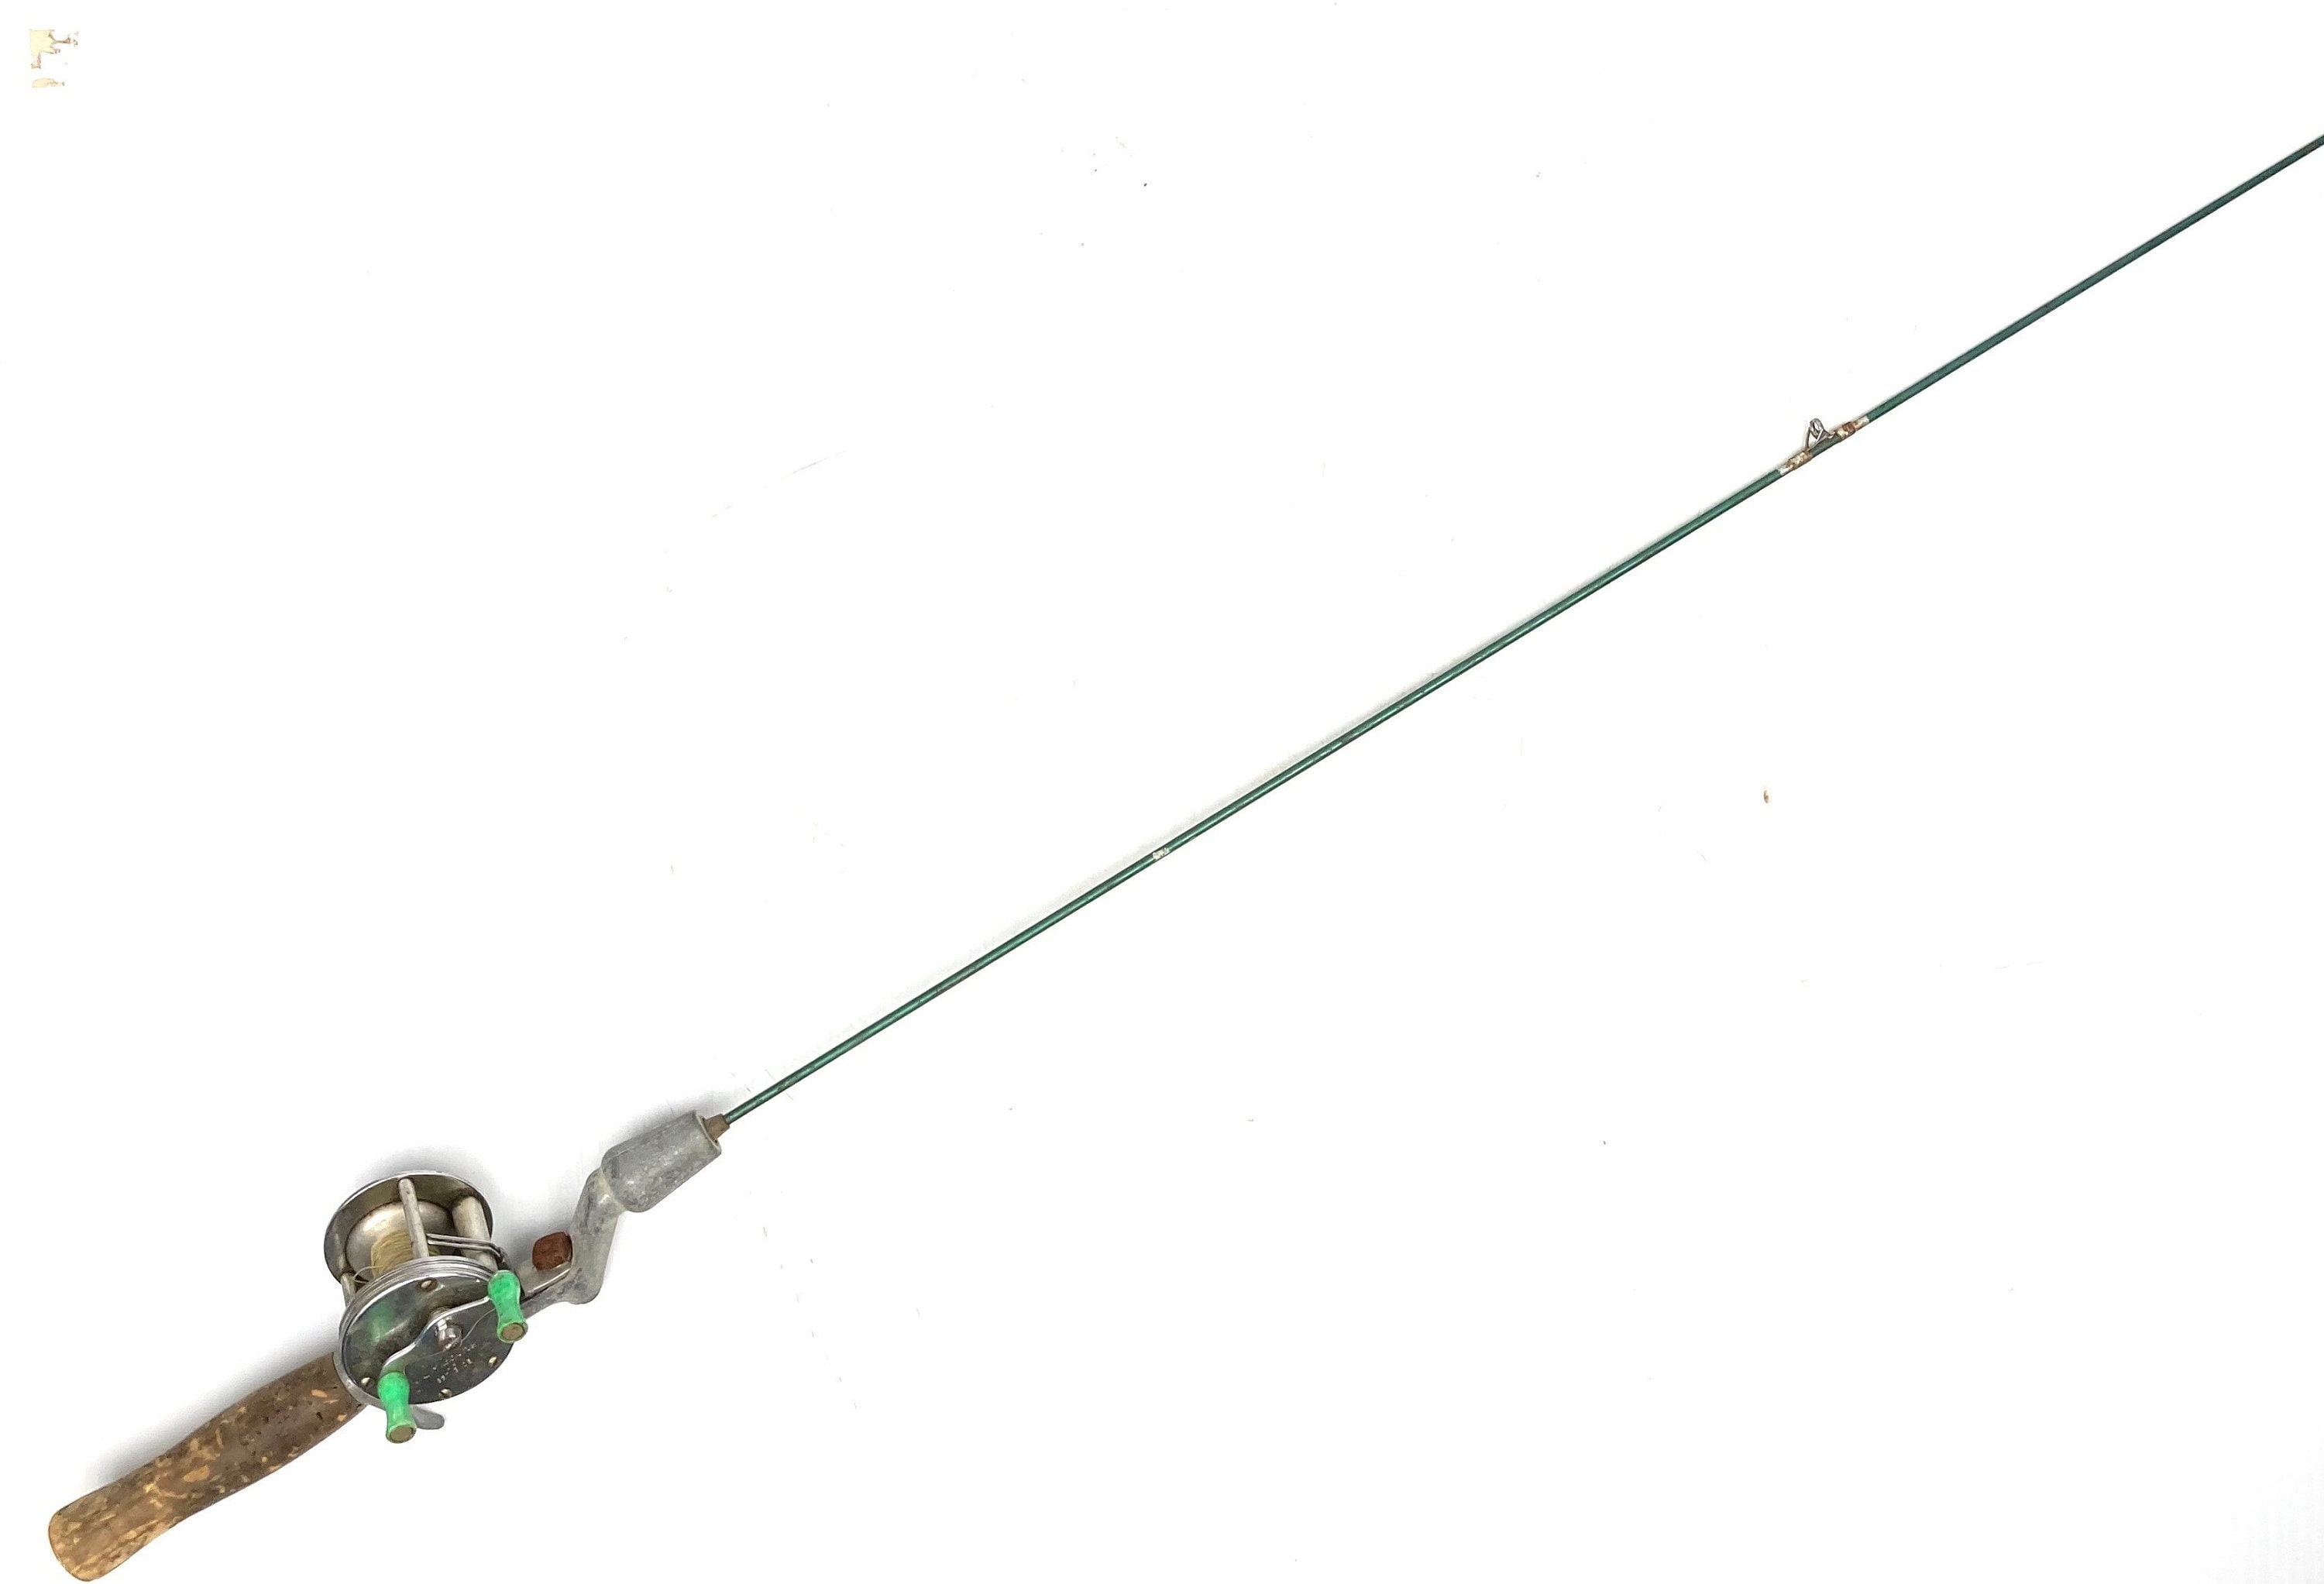 Miniature Fishing Pole 3 to 5 1:24 Scale Fishing Rod Dollhouse